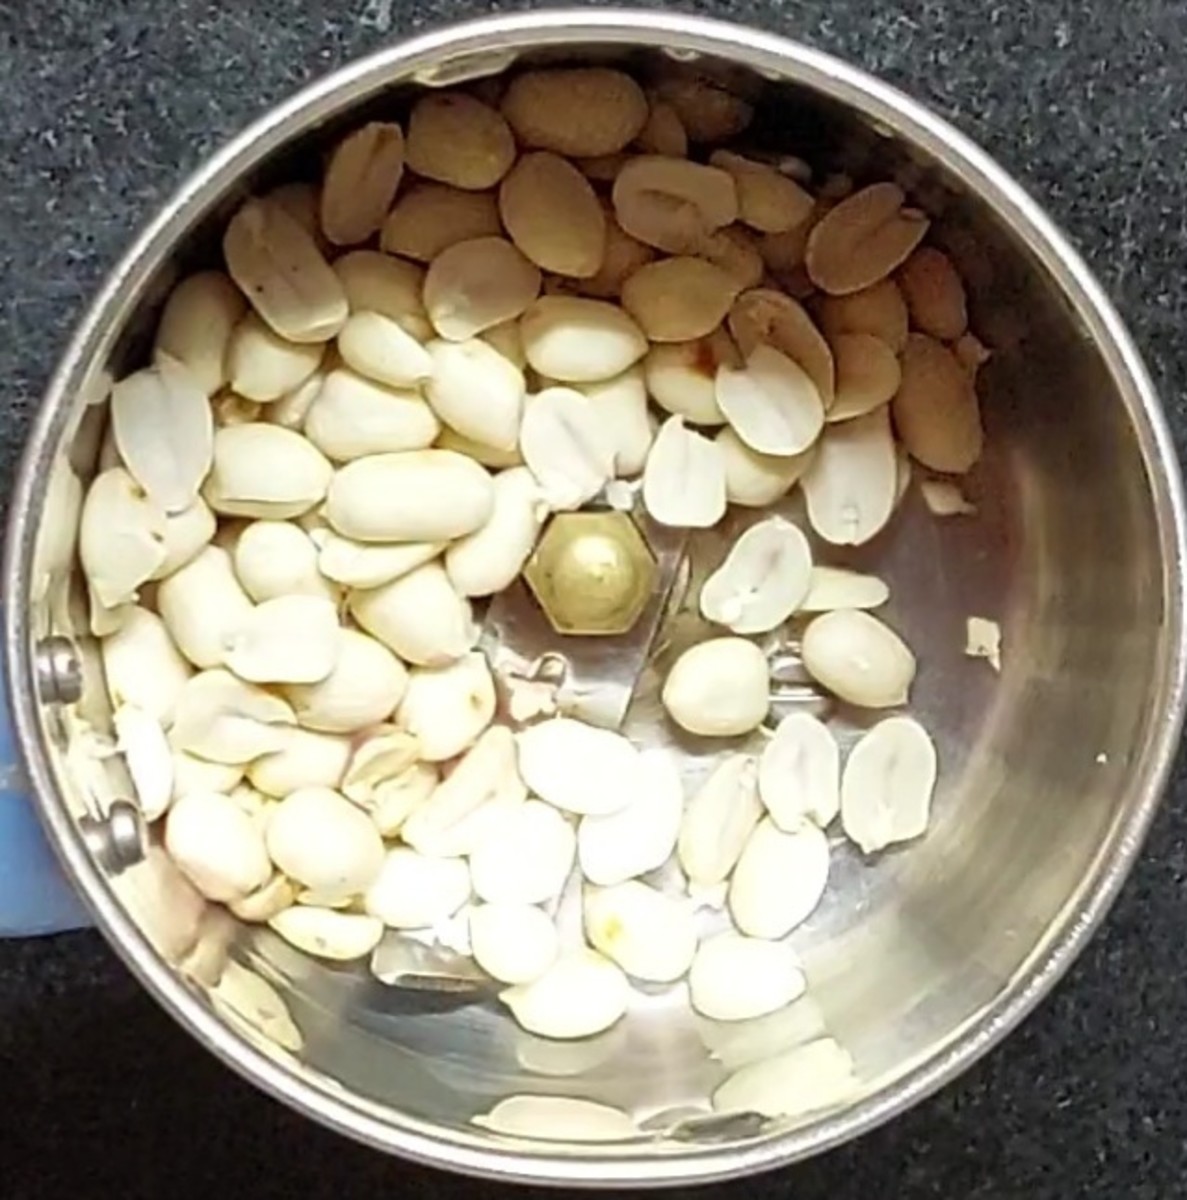 Transfer the peeled peanuts to a mixer jar.